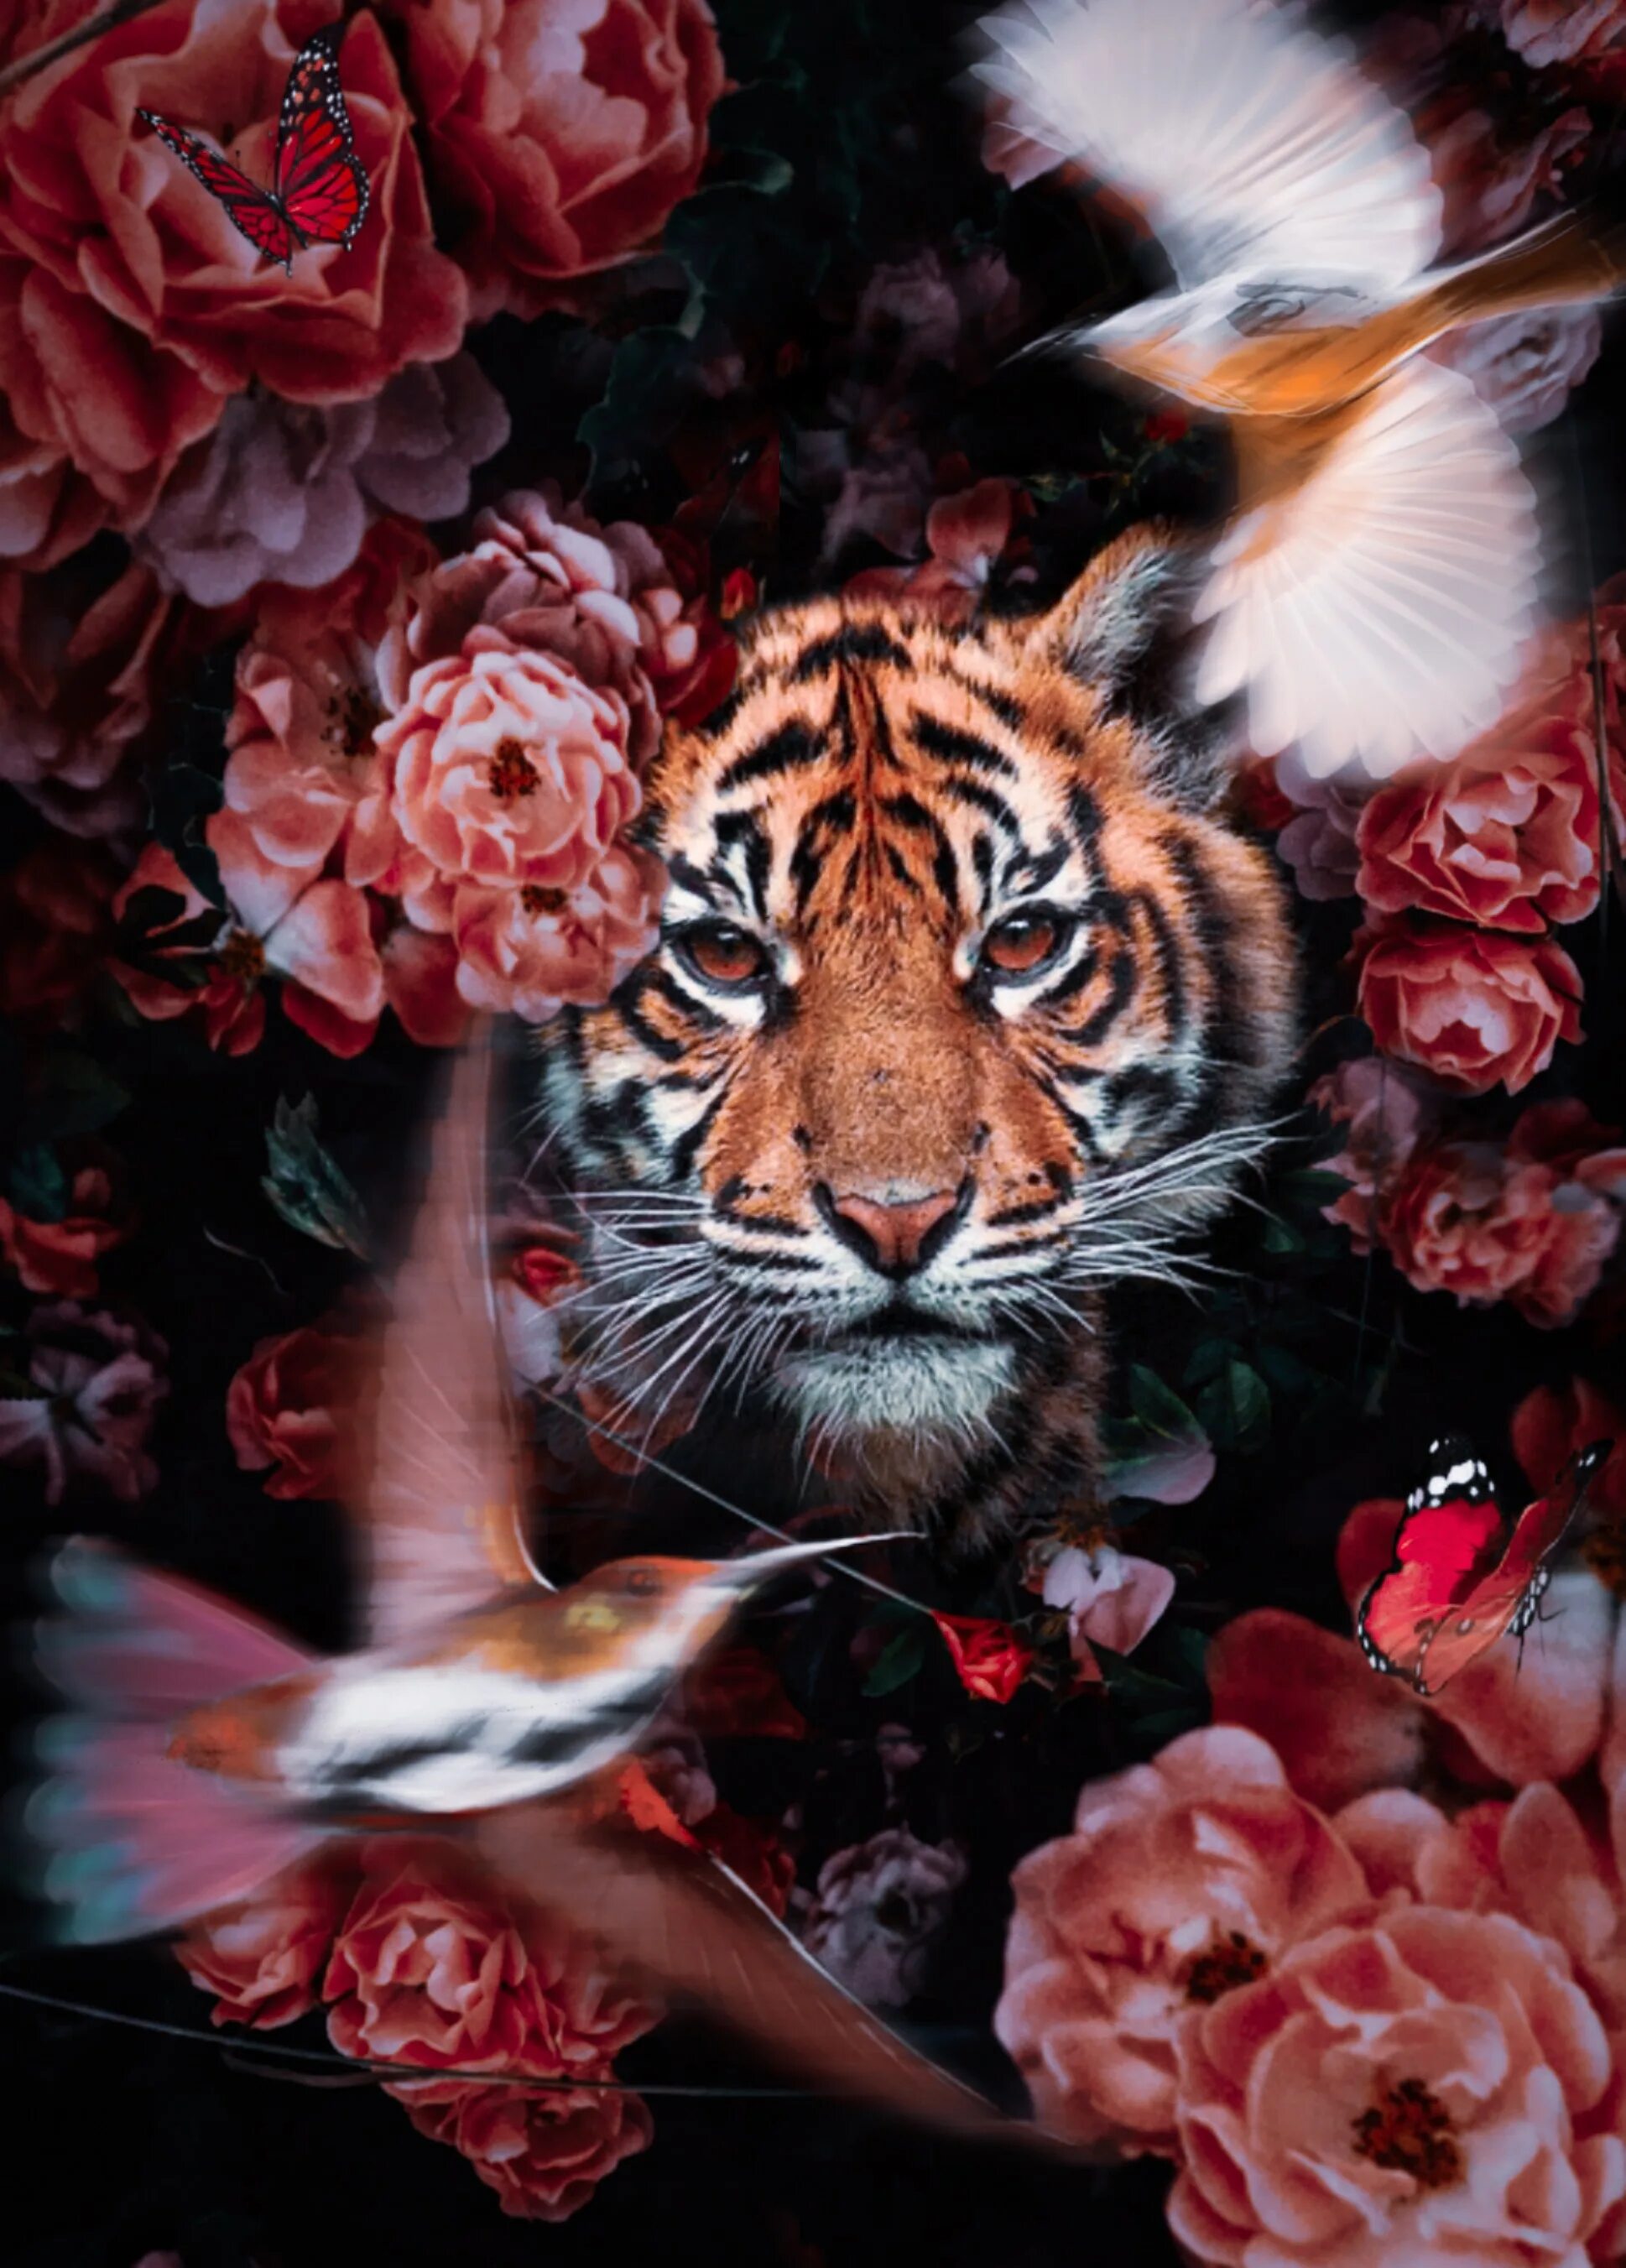 Заставки на телефон тиграми бесплатные. Тайгер Флауэрс. Красивый тигр. Тигр с цветами. Шикарный тигр.